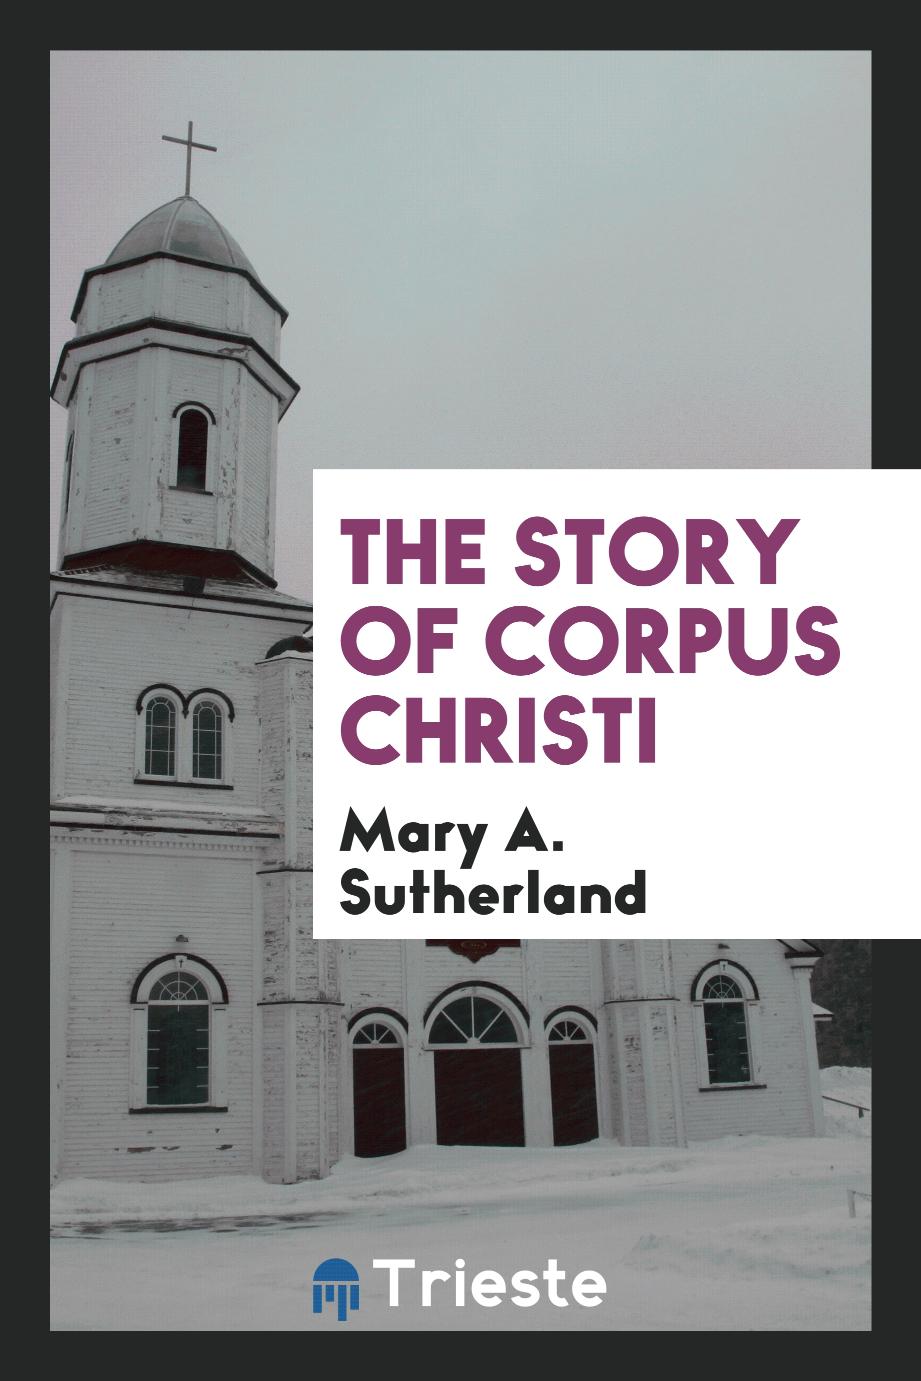 The story of Corpus Christi